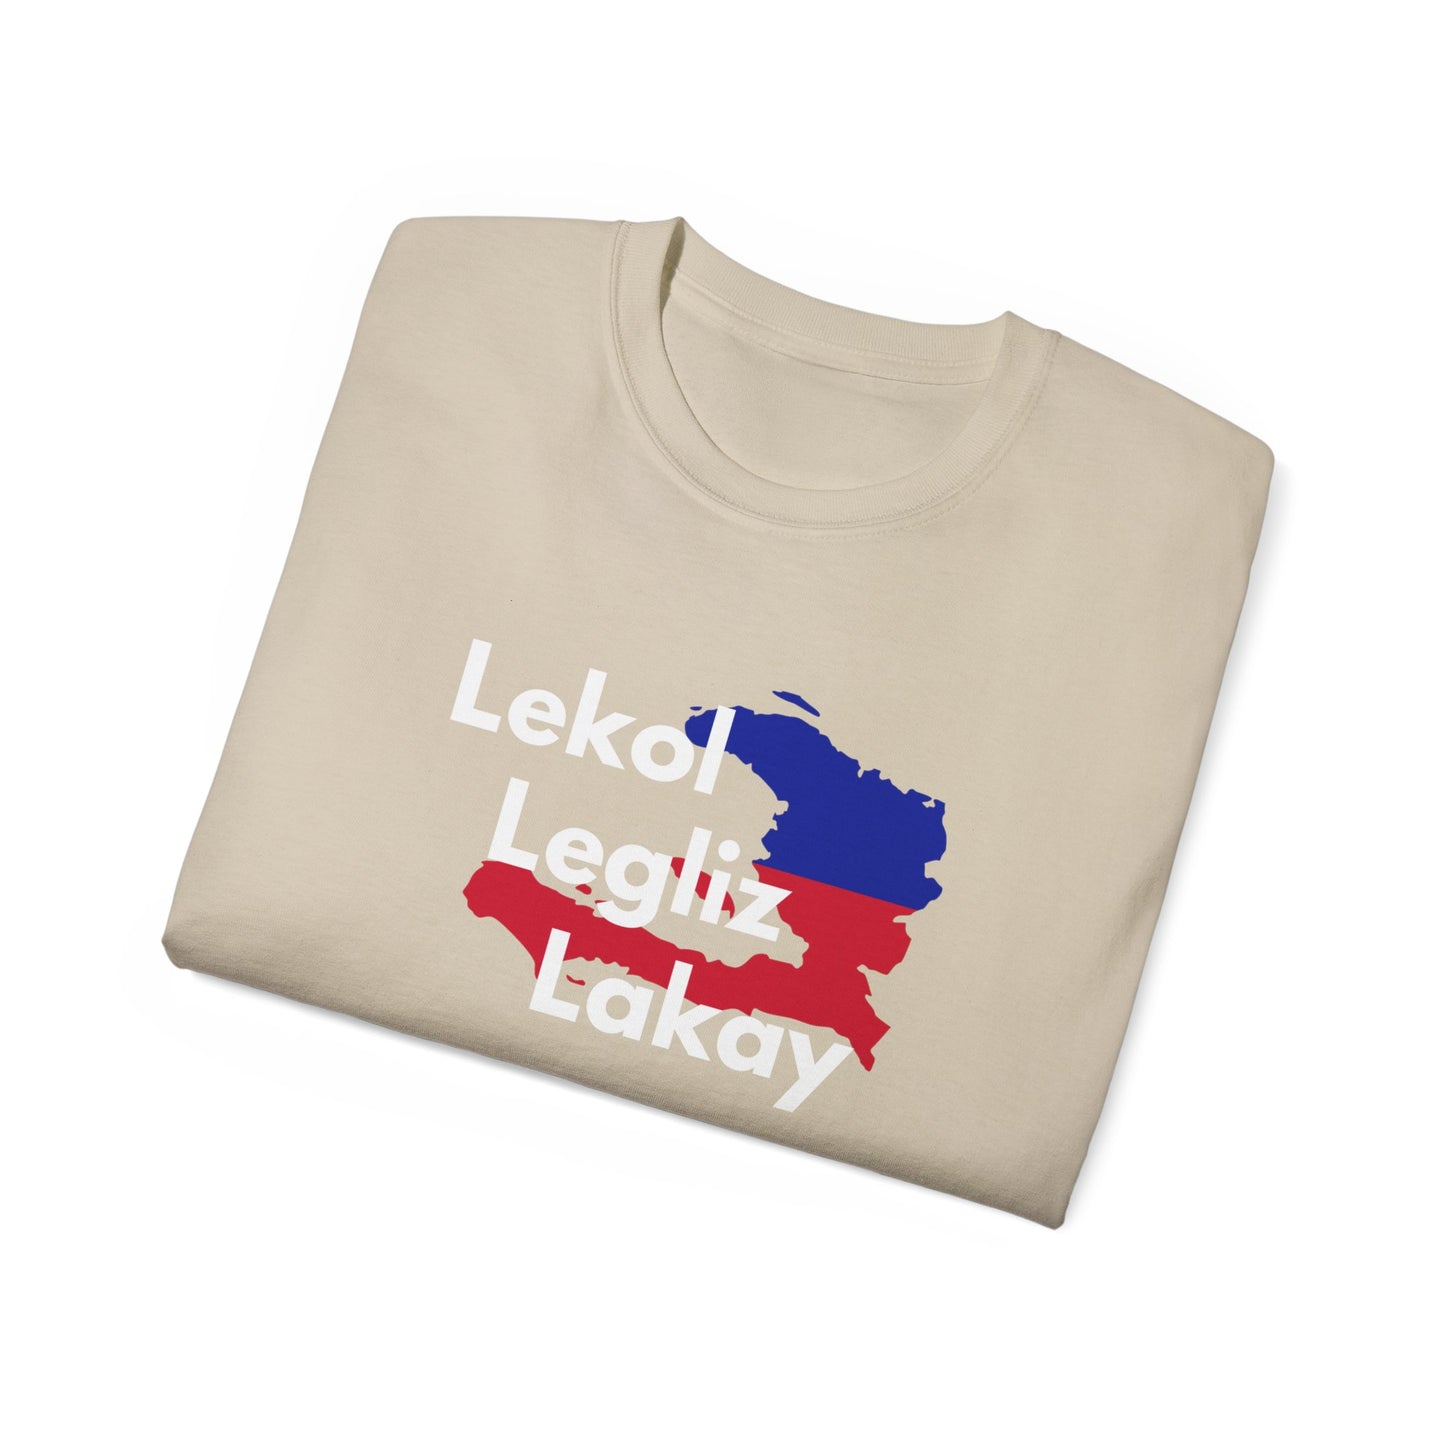 Lekol Legliz Lakay Tee Shirt - Sand / Tan